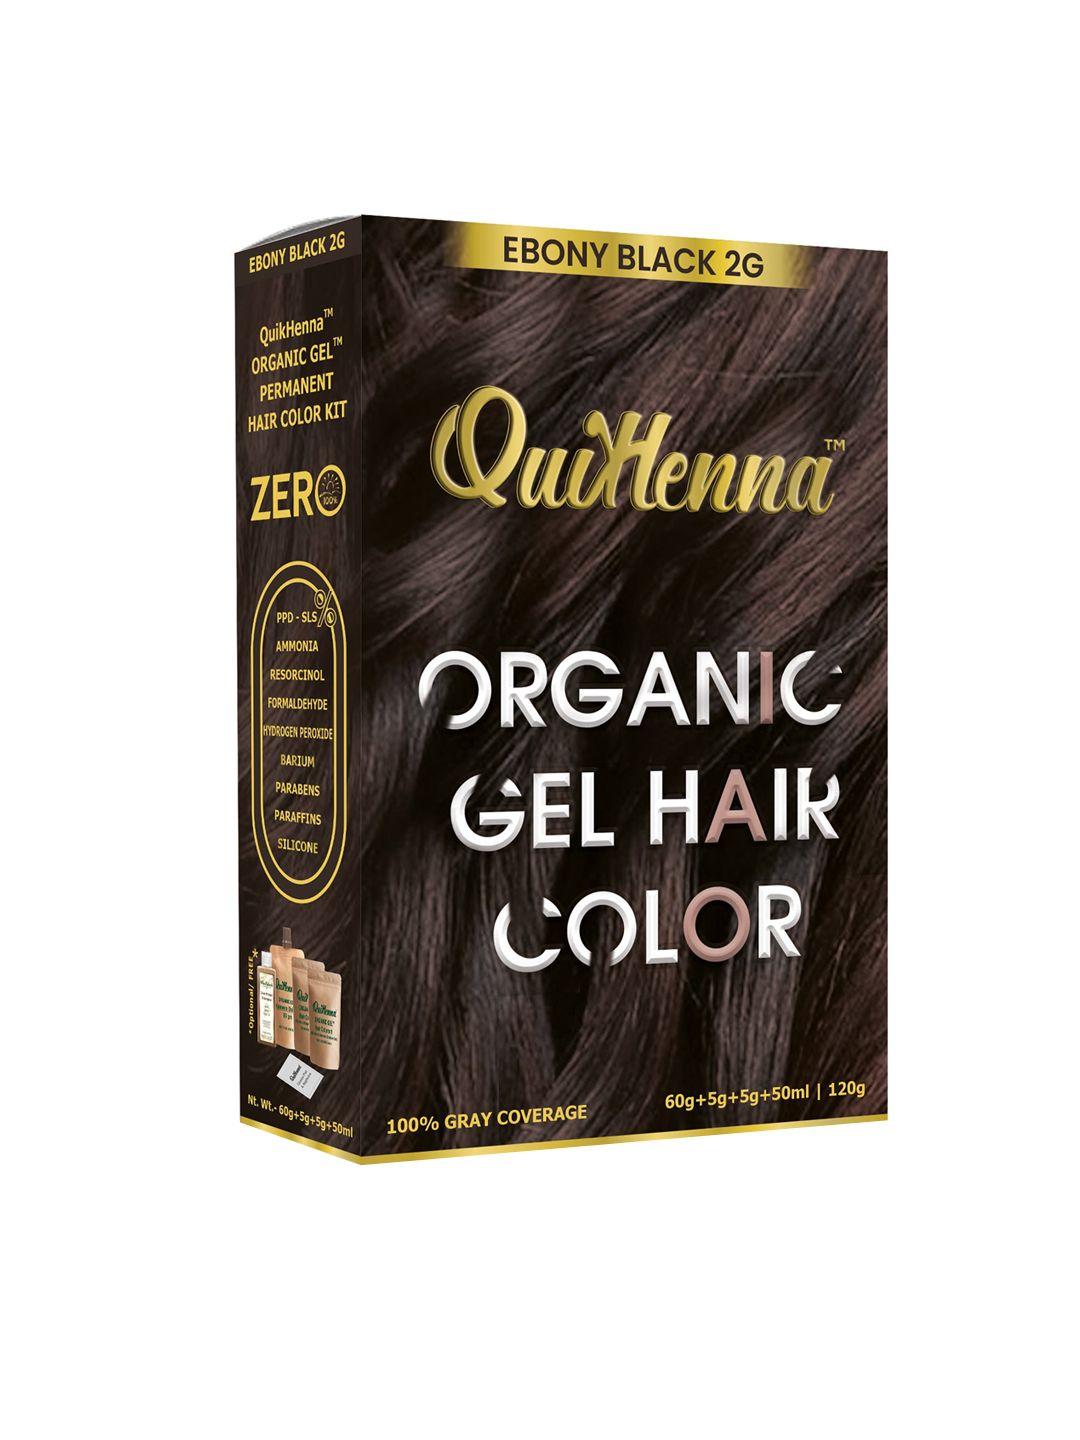 quikhenna damage free organic gel hair color 120 g - ebony black 2g